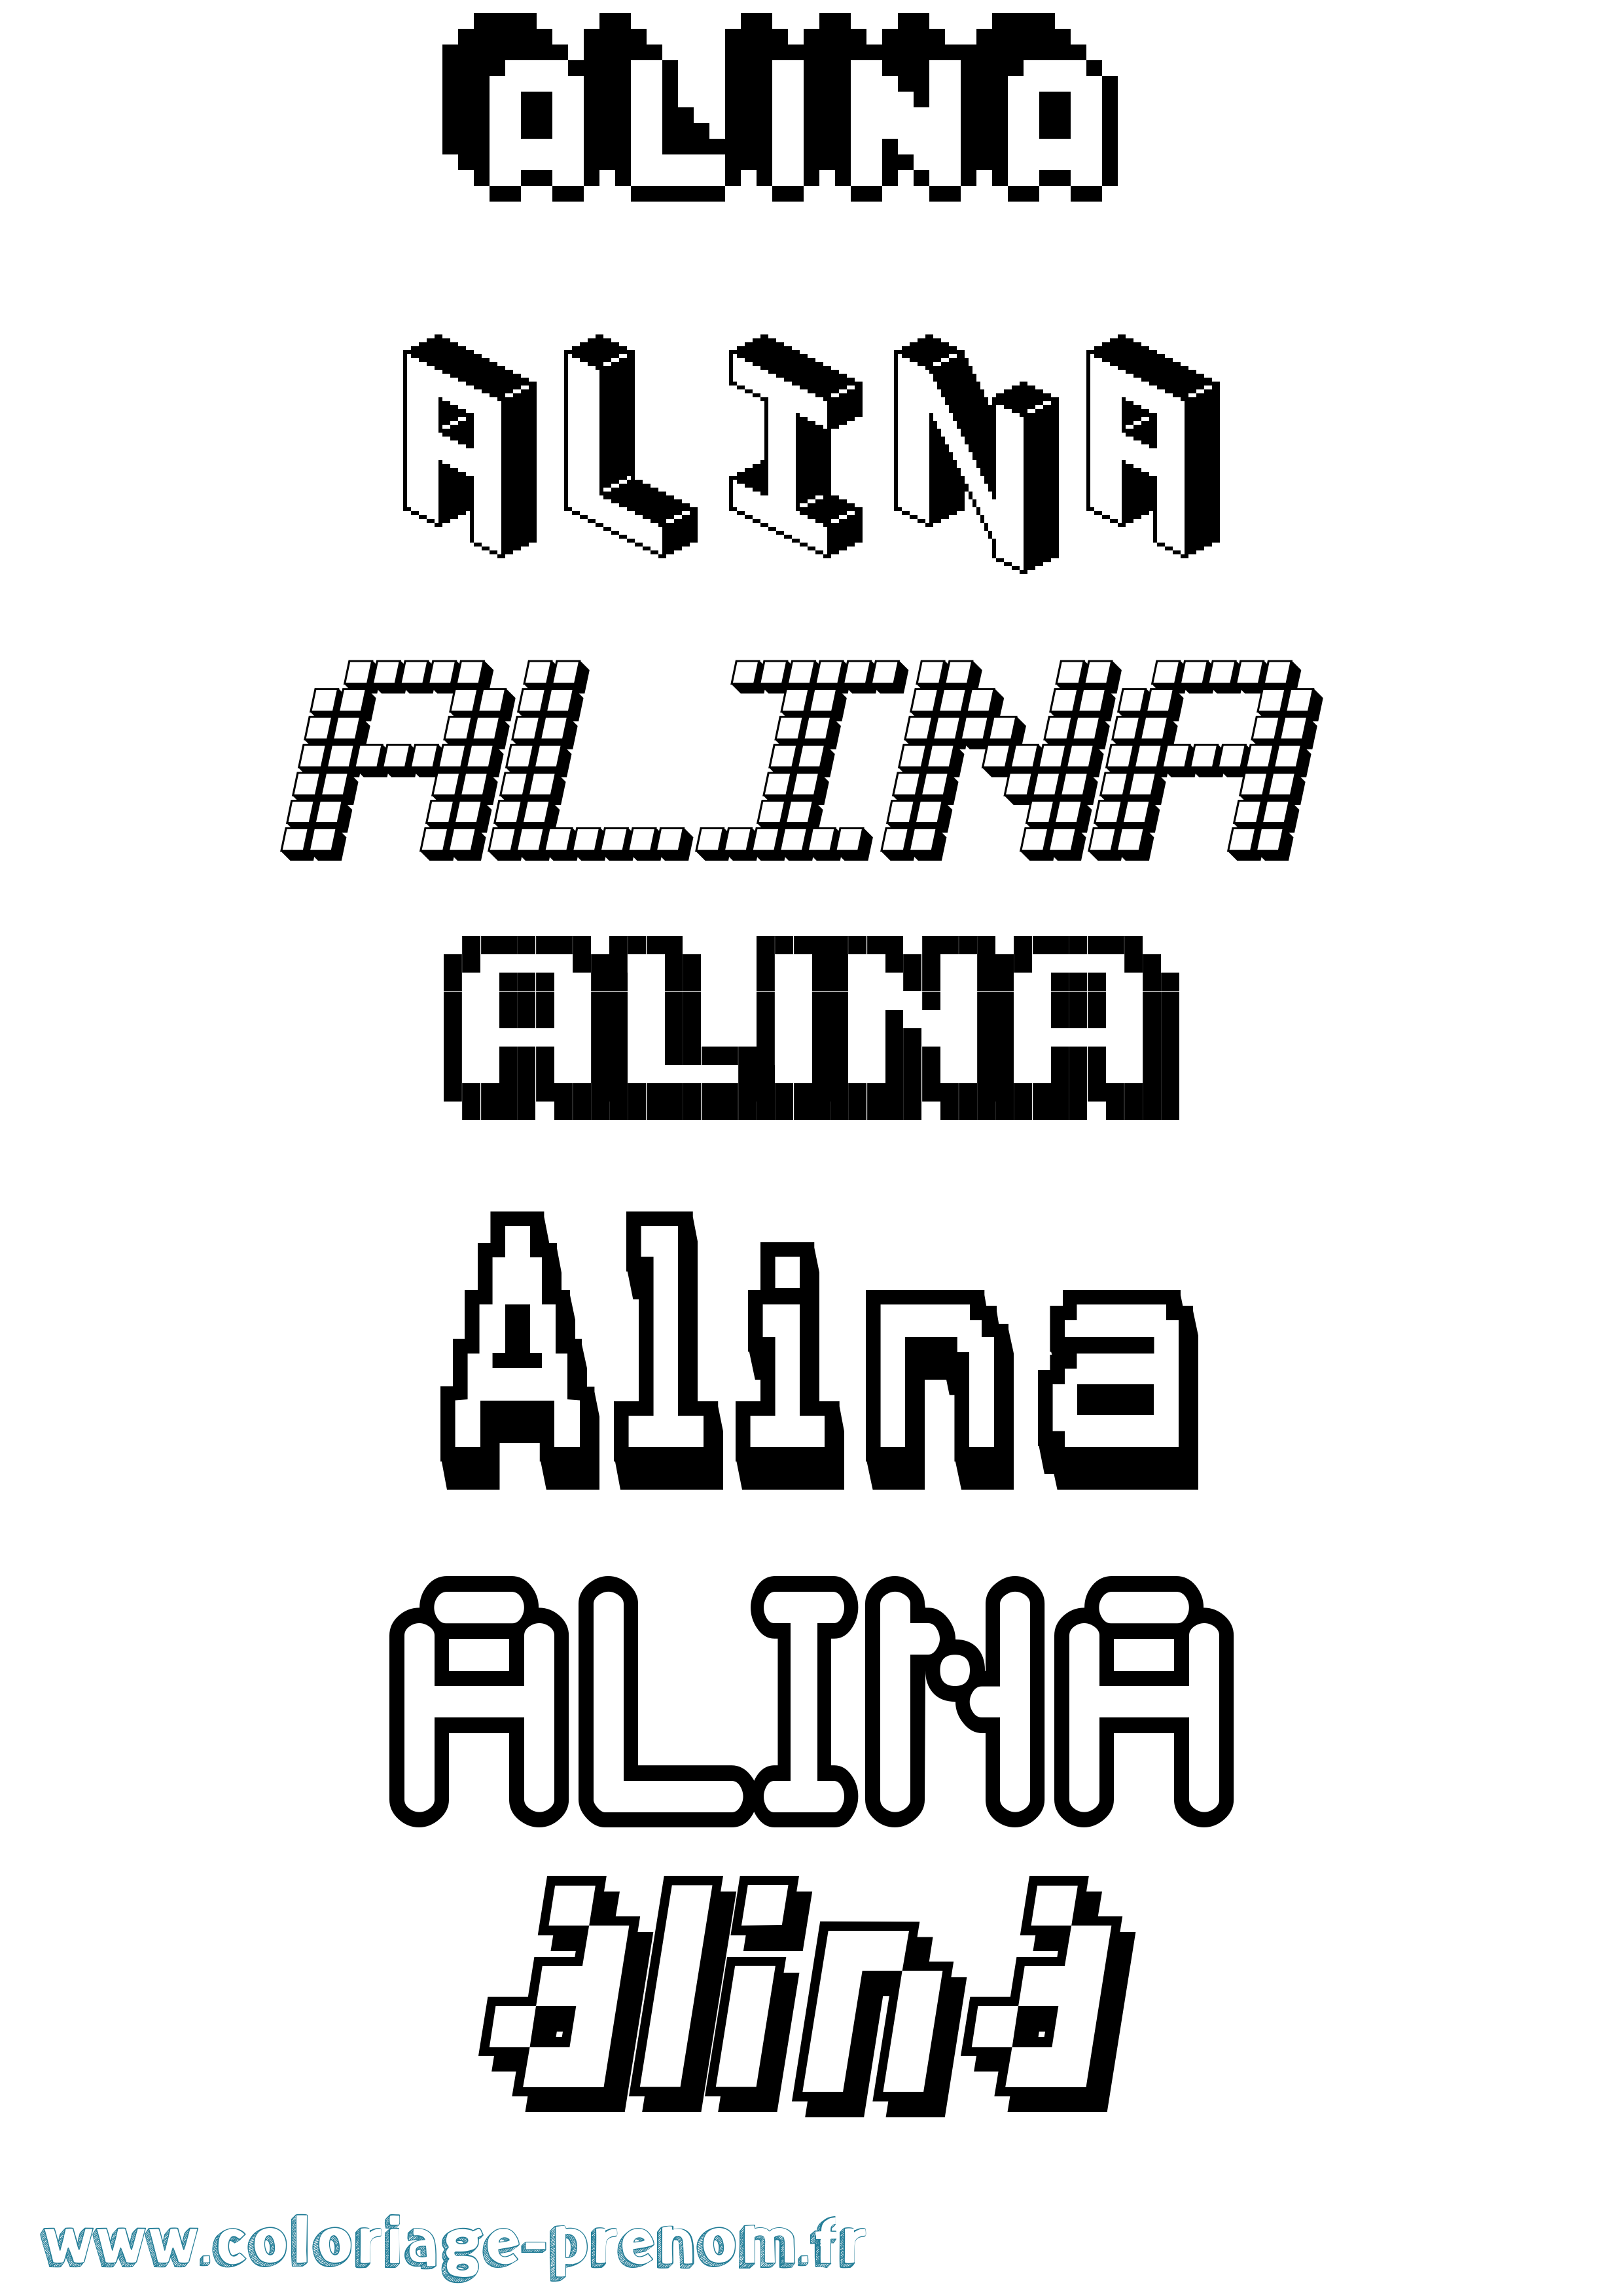 Coloriage prénom Alina Pixel